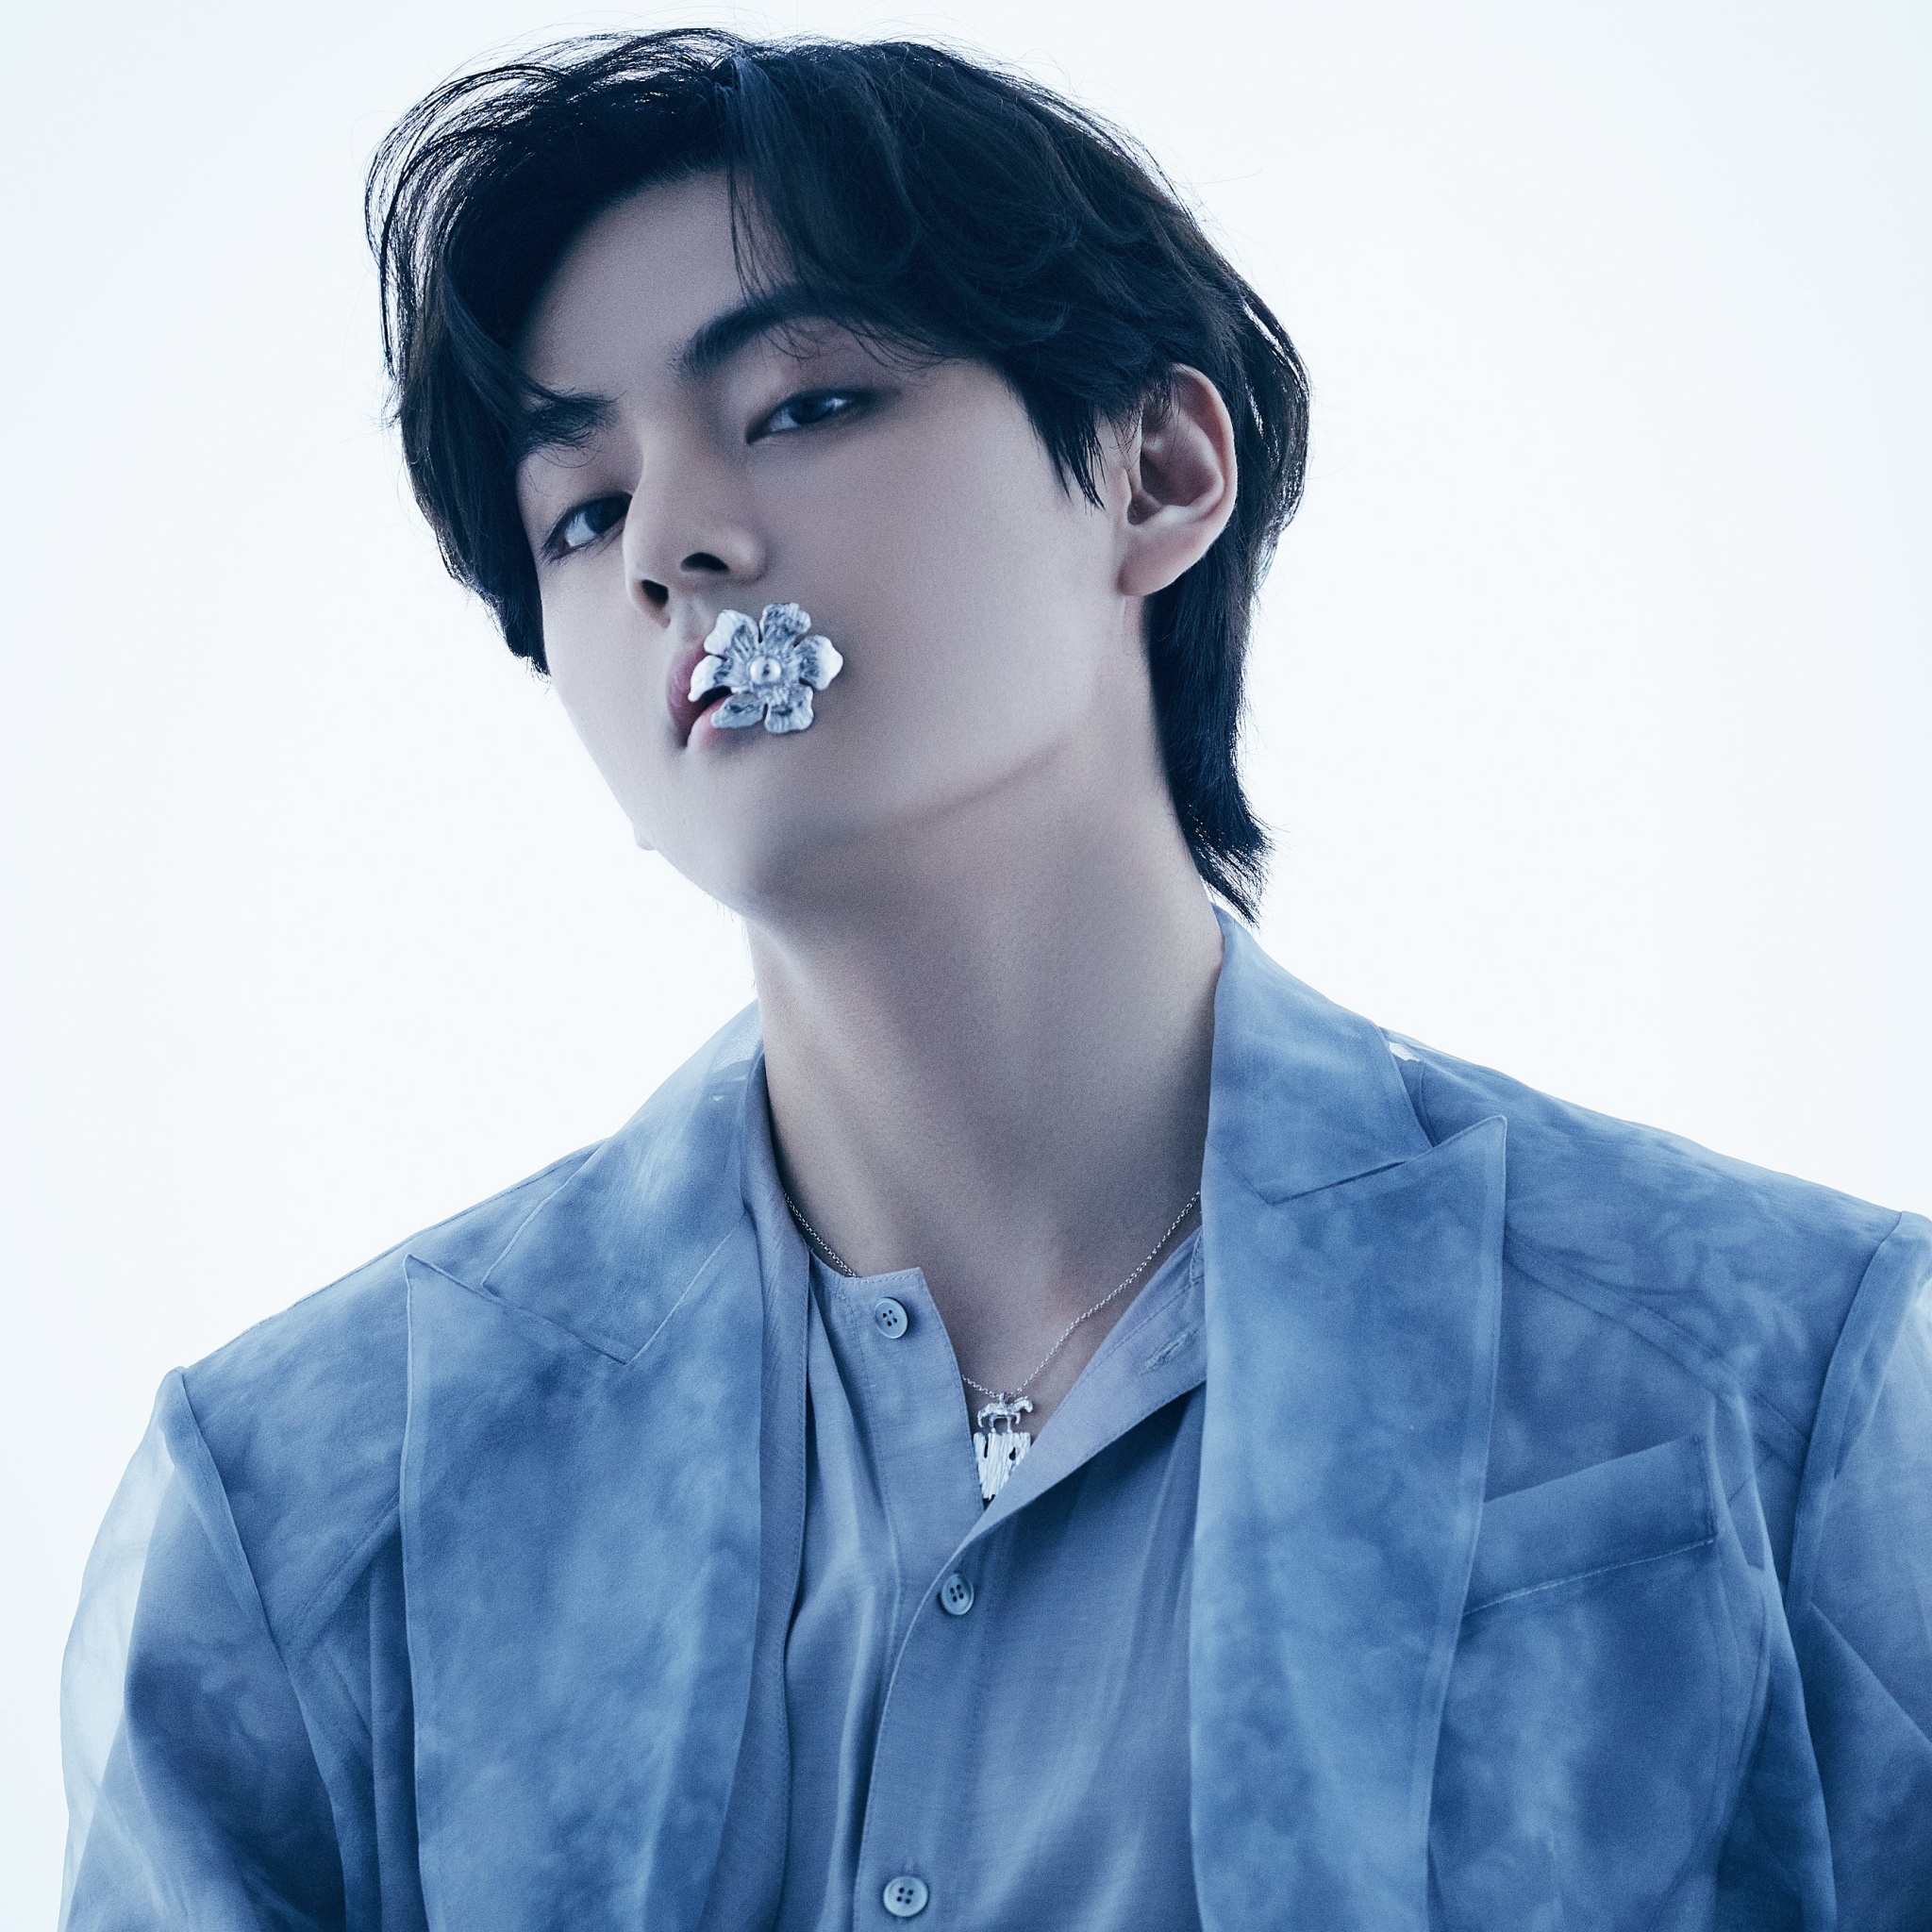 HD wallpaper BTS Jungkook Korean men Asian Kpop singer jacket   Wallpaper Flare